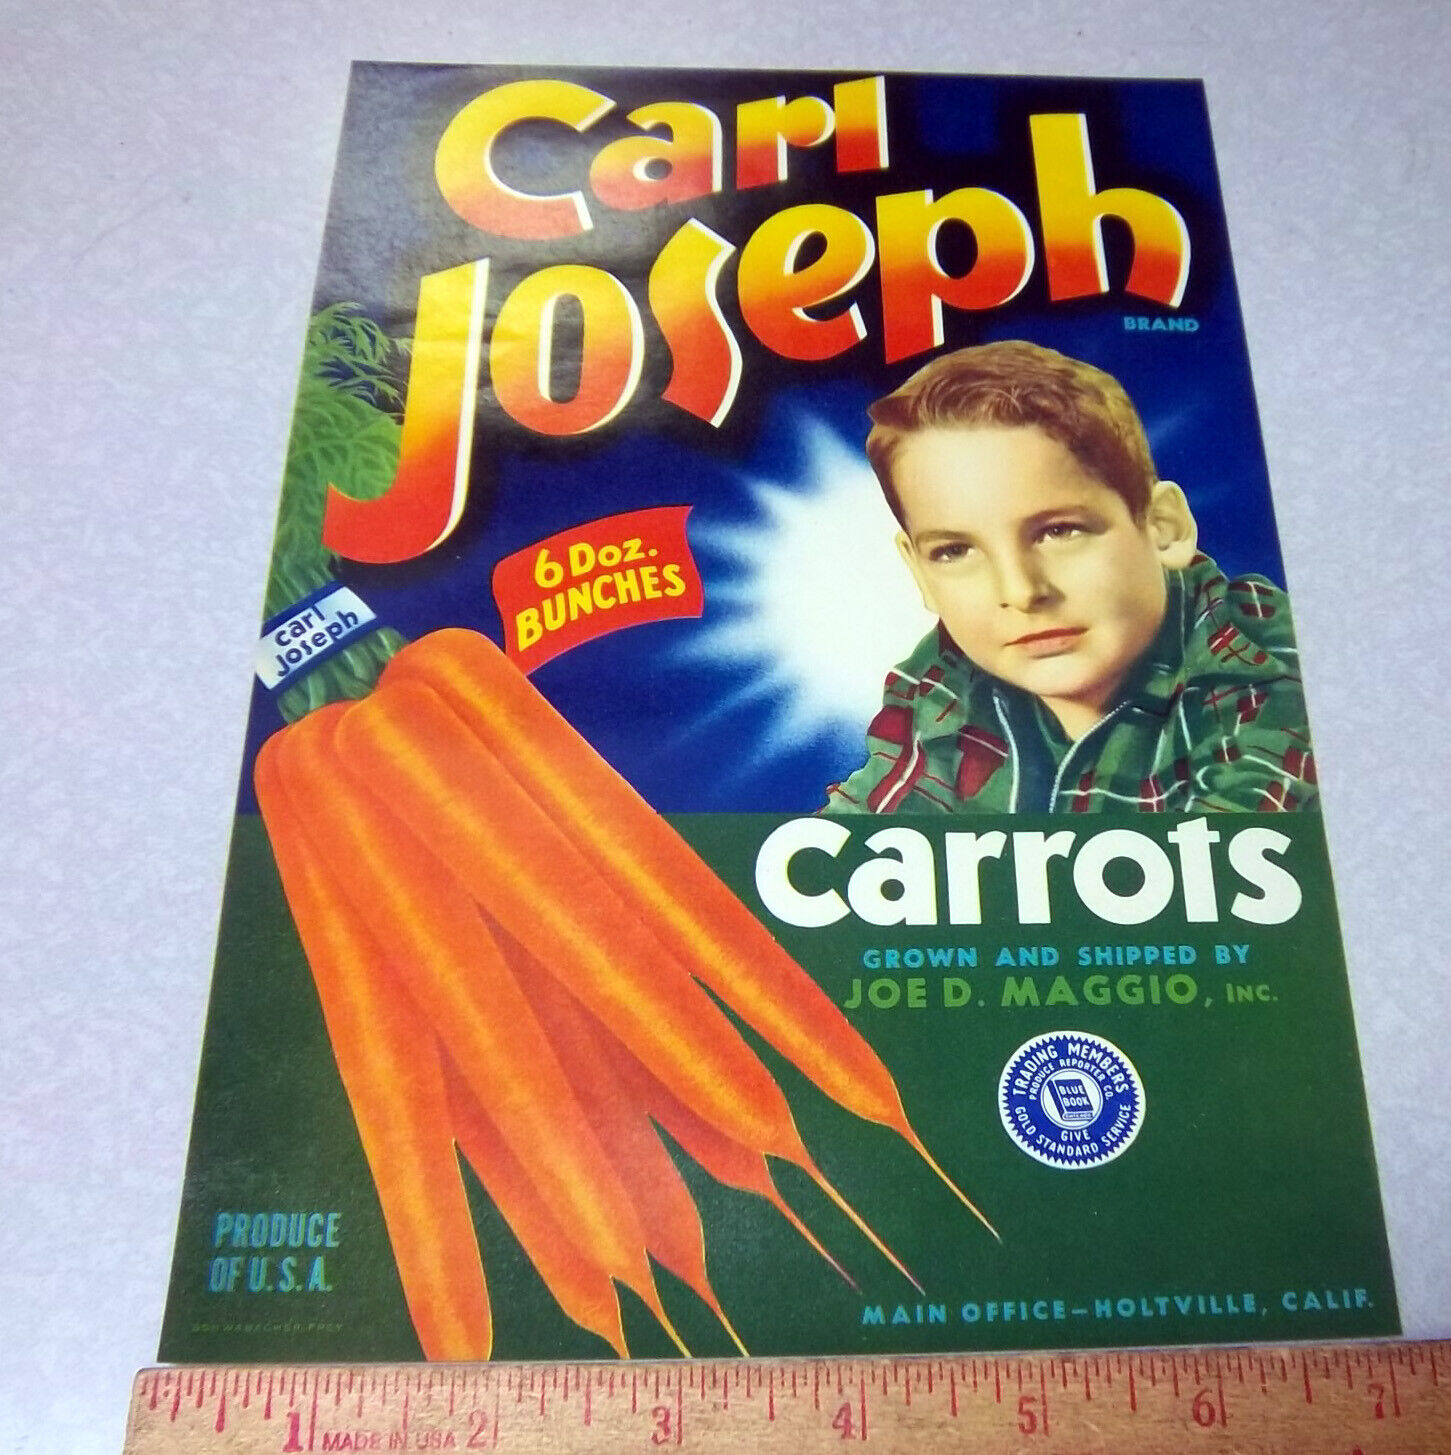 Vintage Original Label, 1950s Carl Joseph Carrots veggie crate Label, beautiful